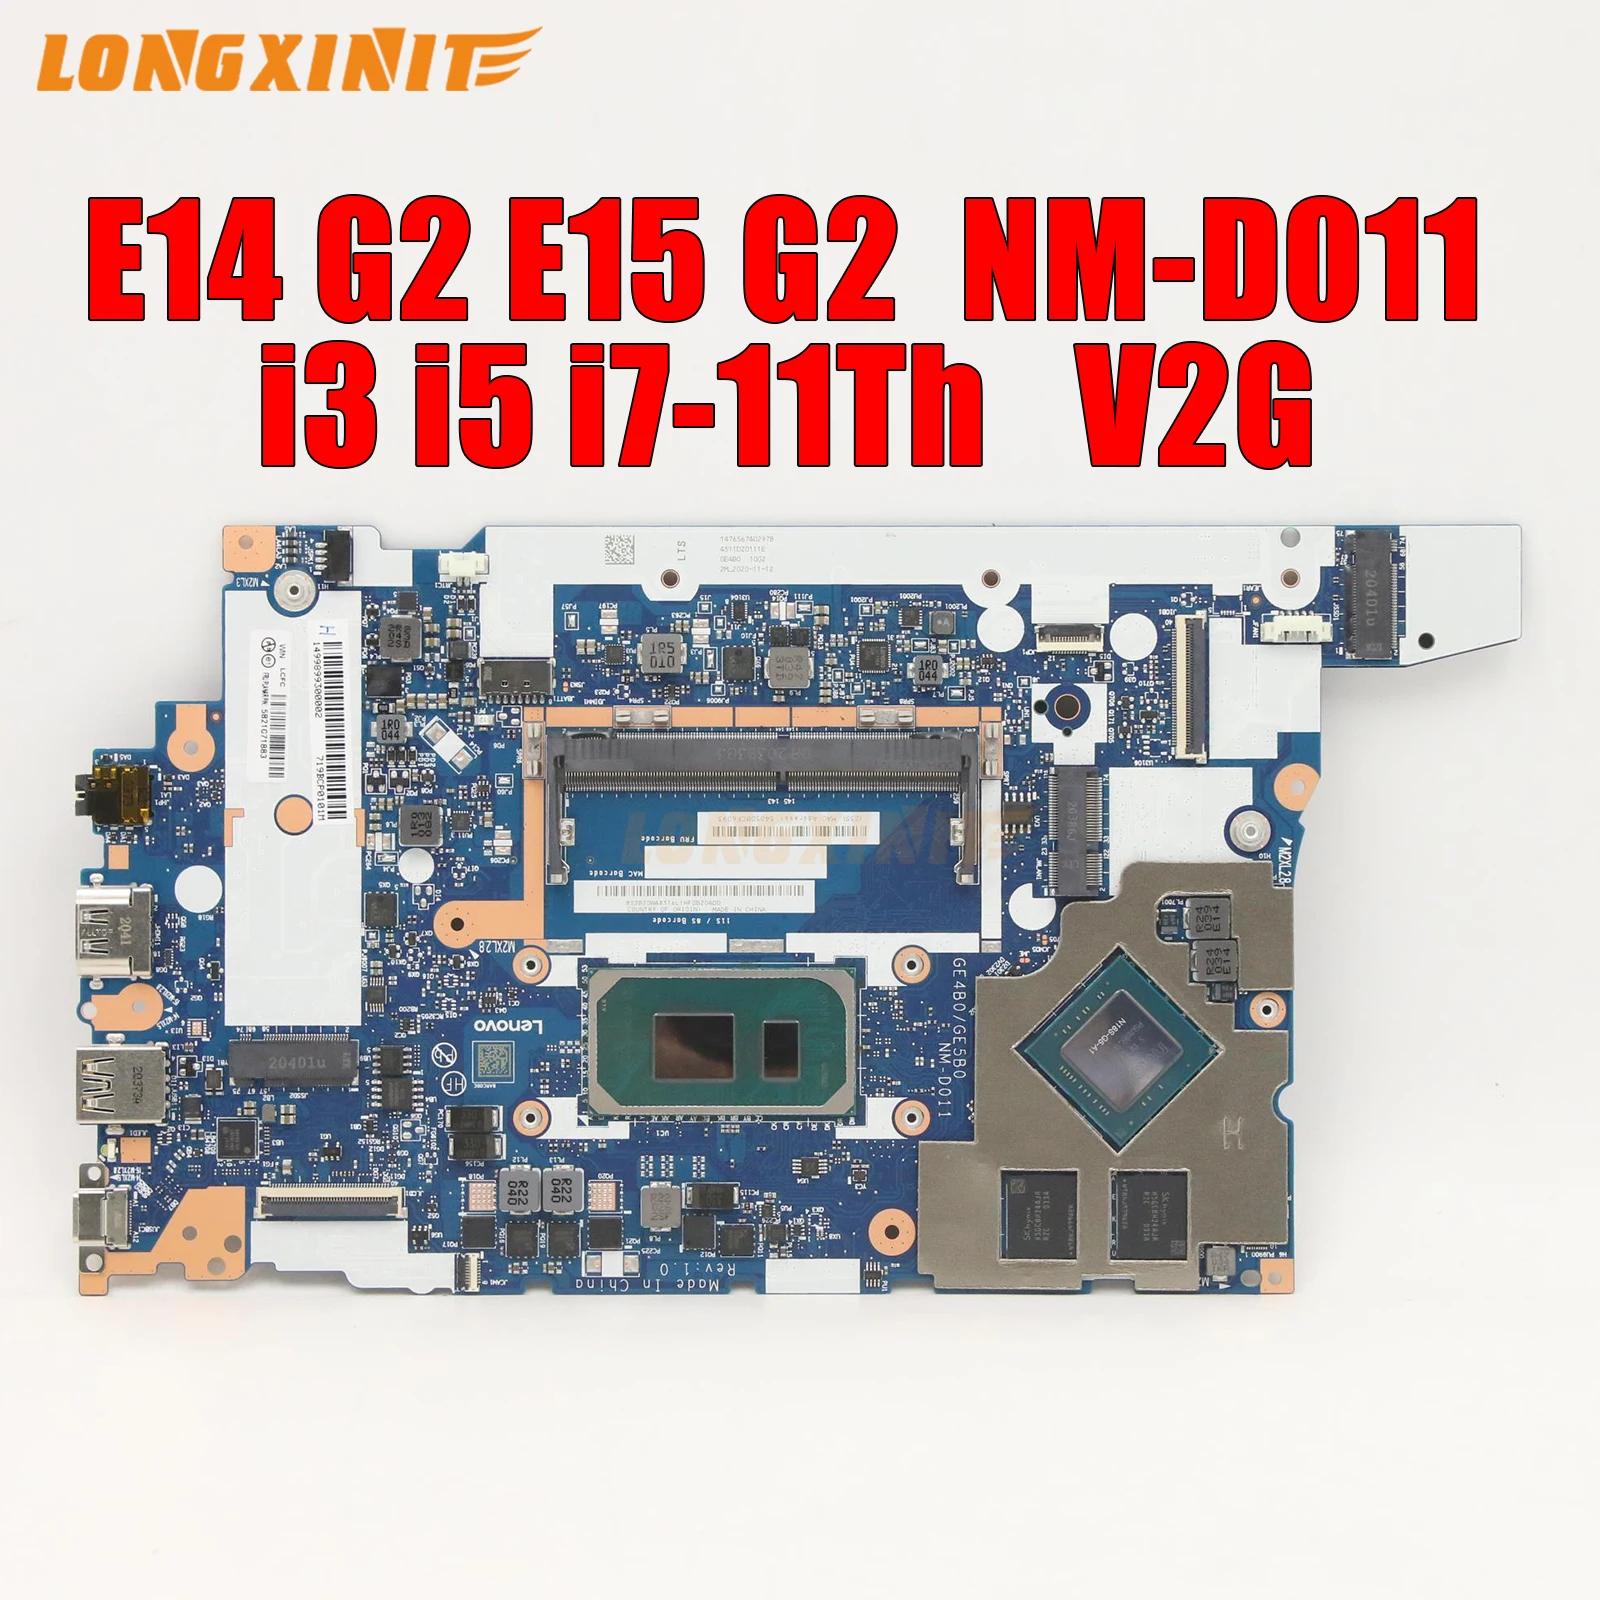 NM-D011 Ʈ  NMD011, Lenovo ThinkPad E14 Gen 2 E15 Gen 2 CPU:i3-1115G4 i5-1135G7 i7-1165G7.GPU:MX350 MX450.